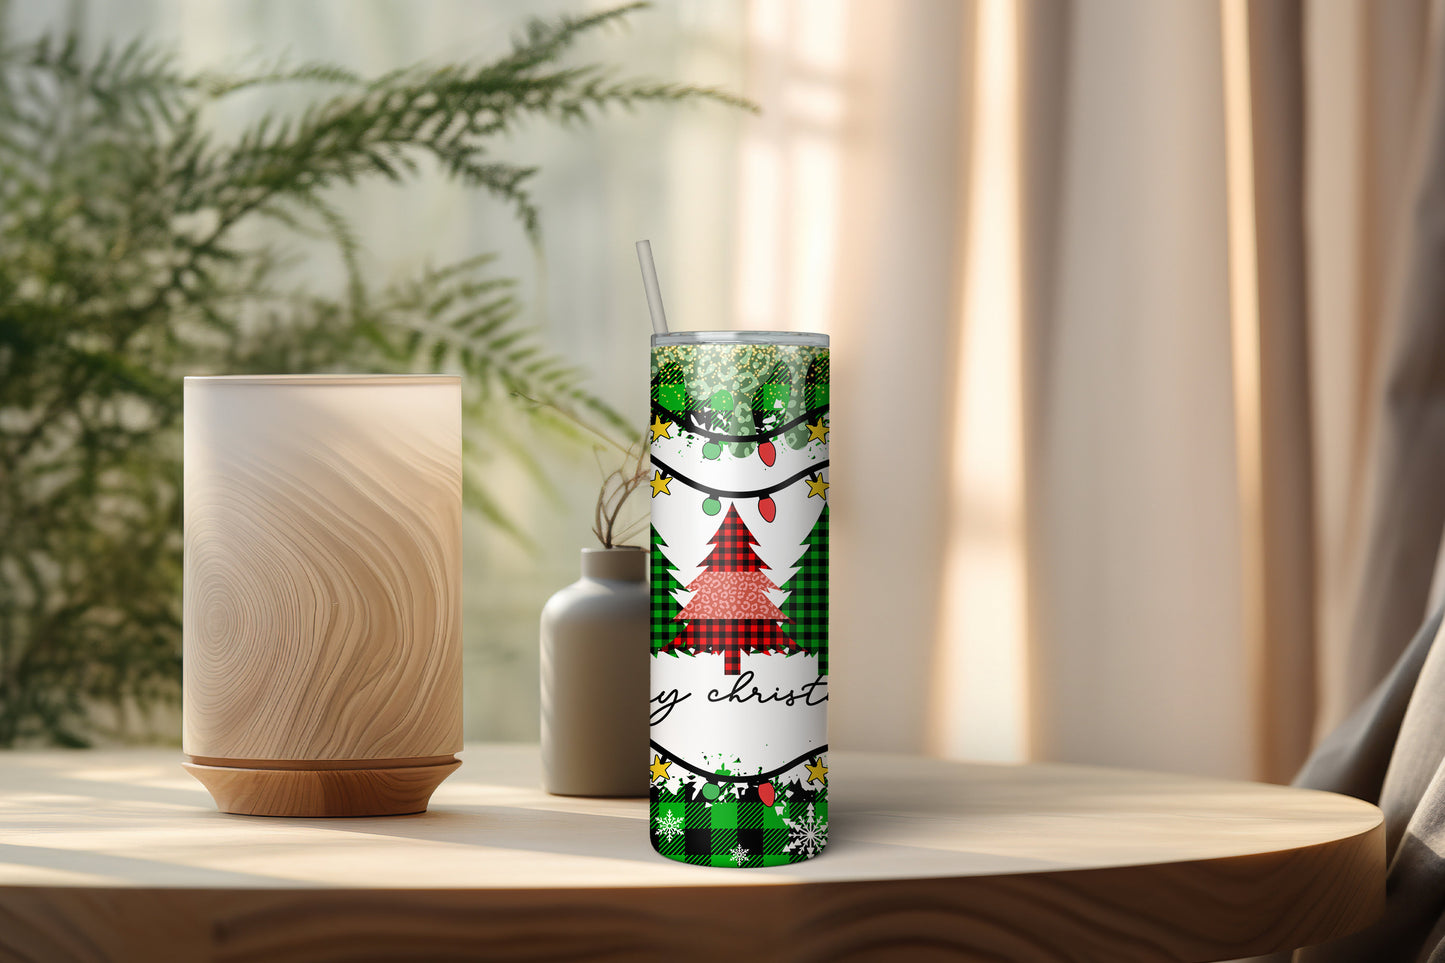 20oz Skinny Tumbler - Festive Holiday Quote, Christmas Candy-Themed Drinkware - Plaid Christmas Tree 'Merry Christmas' Travel Mug